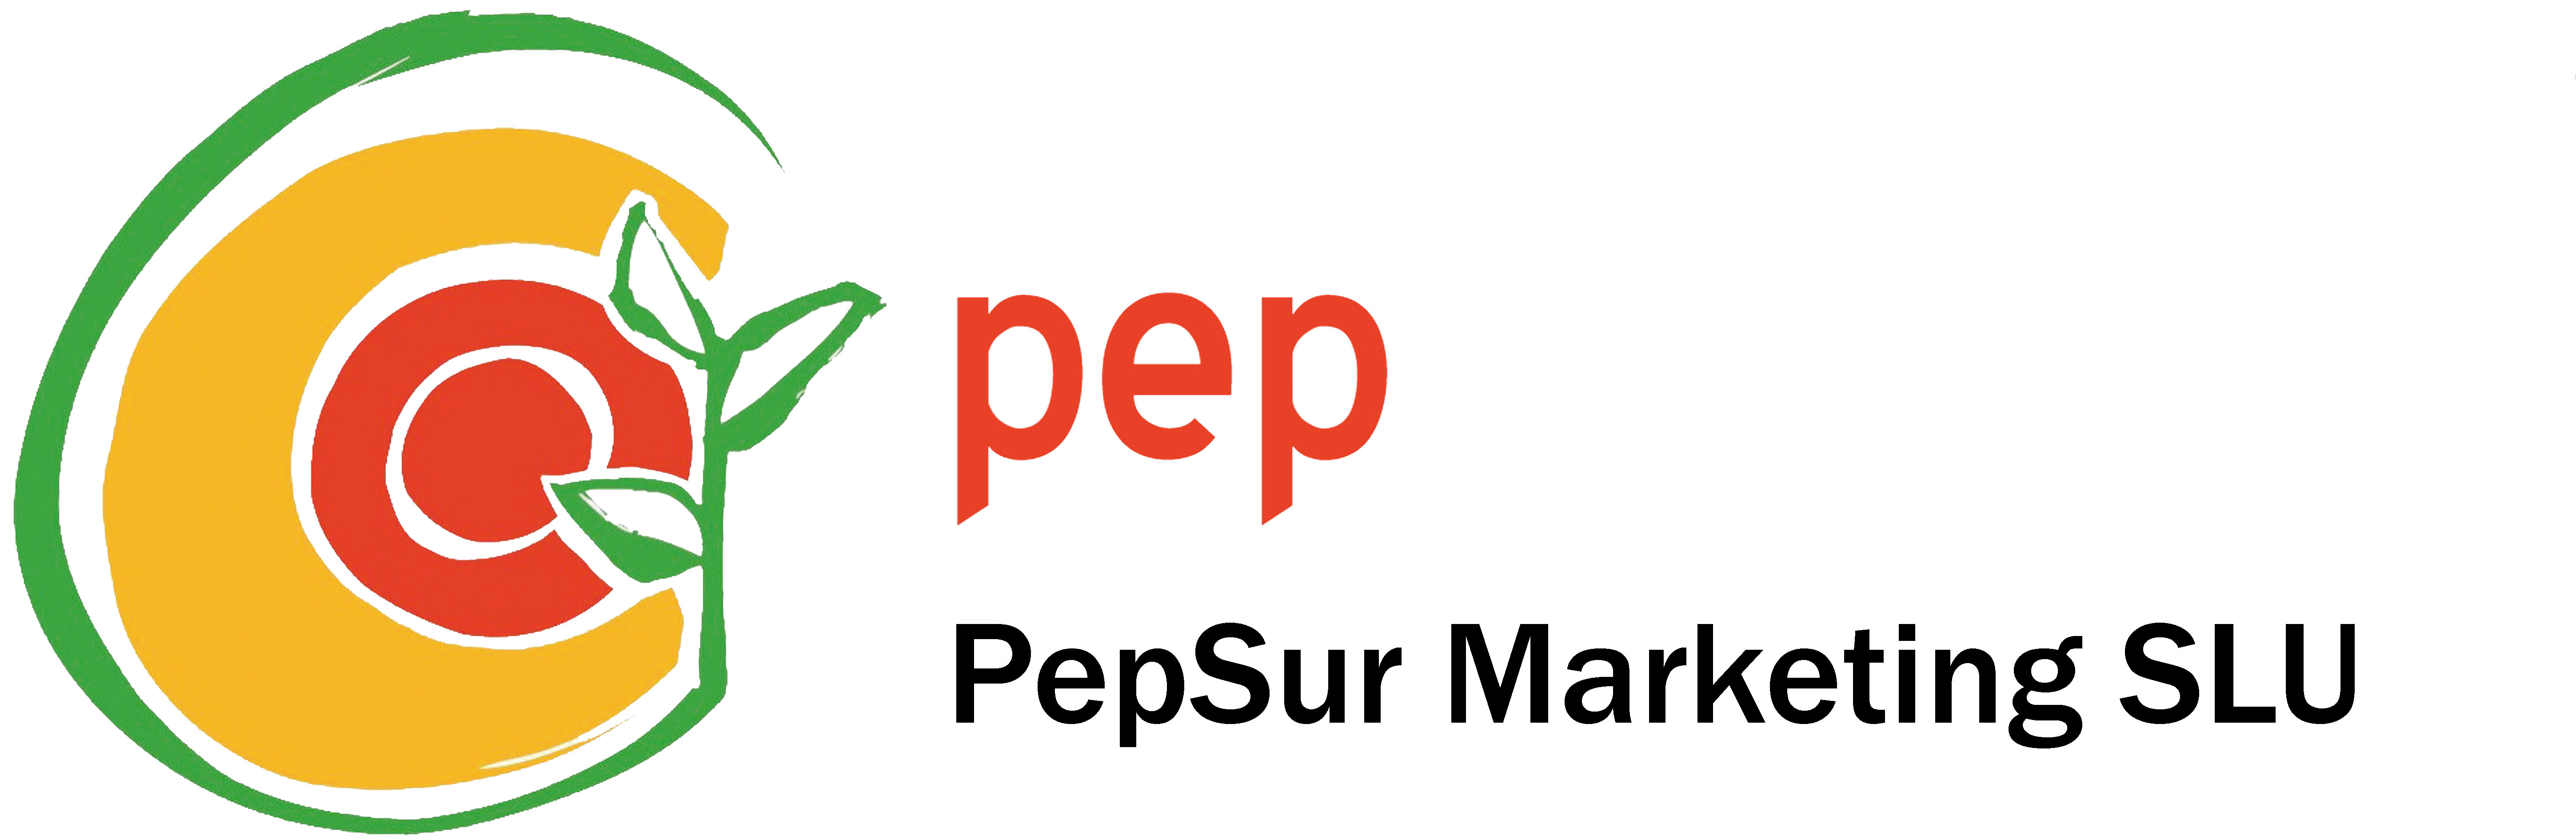 Logo - LOGO_PEPSUR MARKETING SLU.jpg